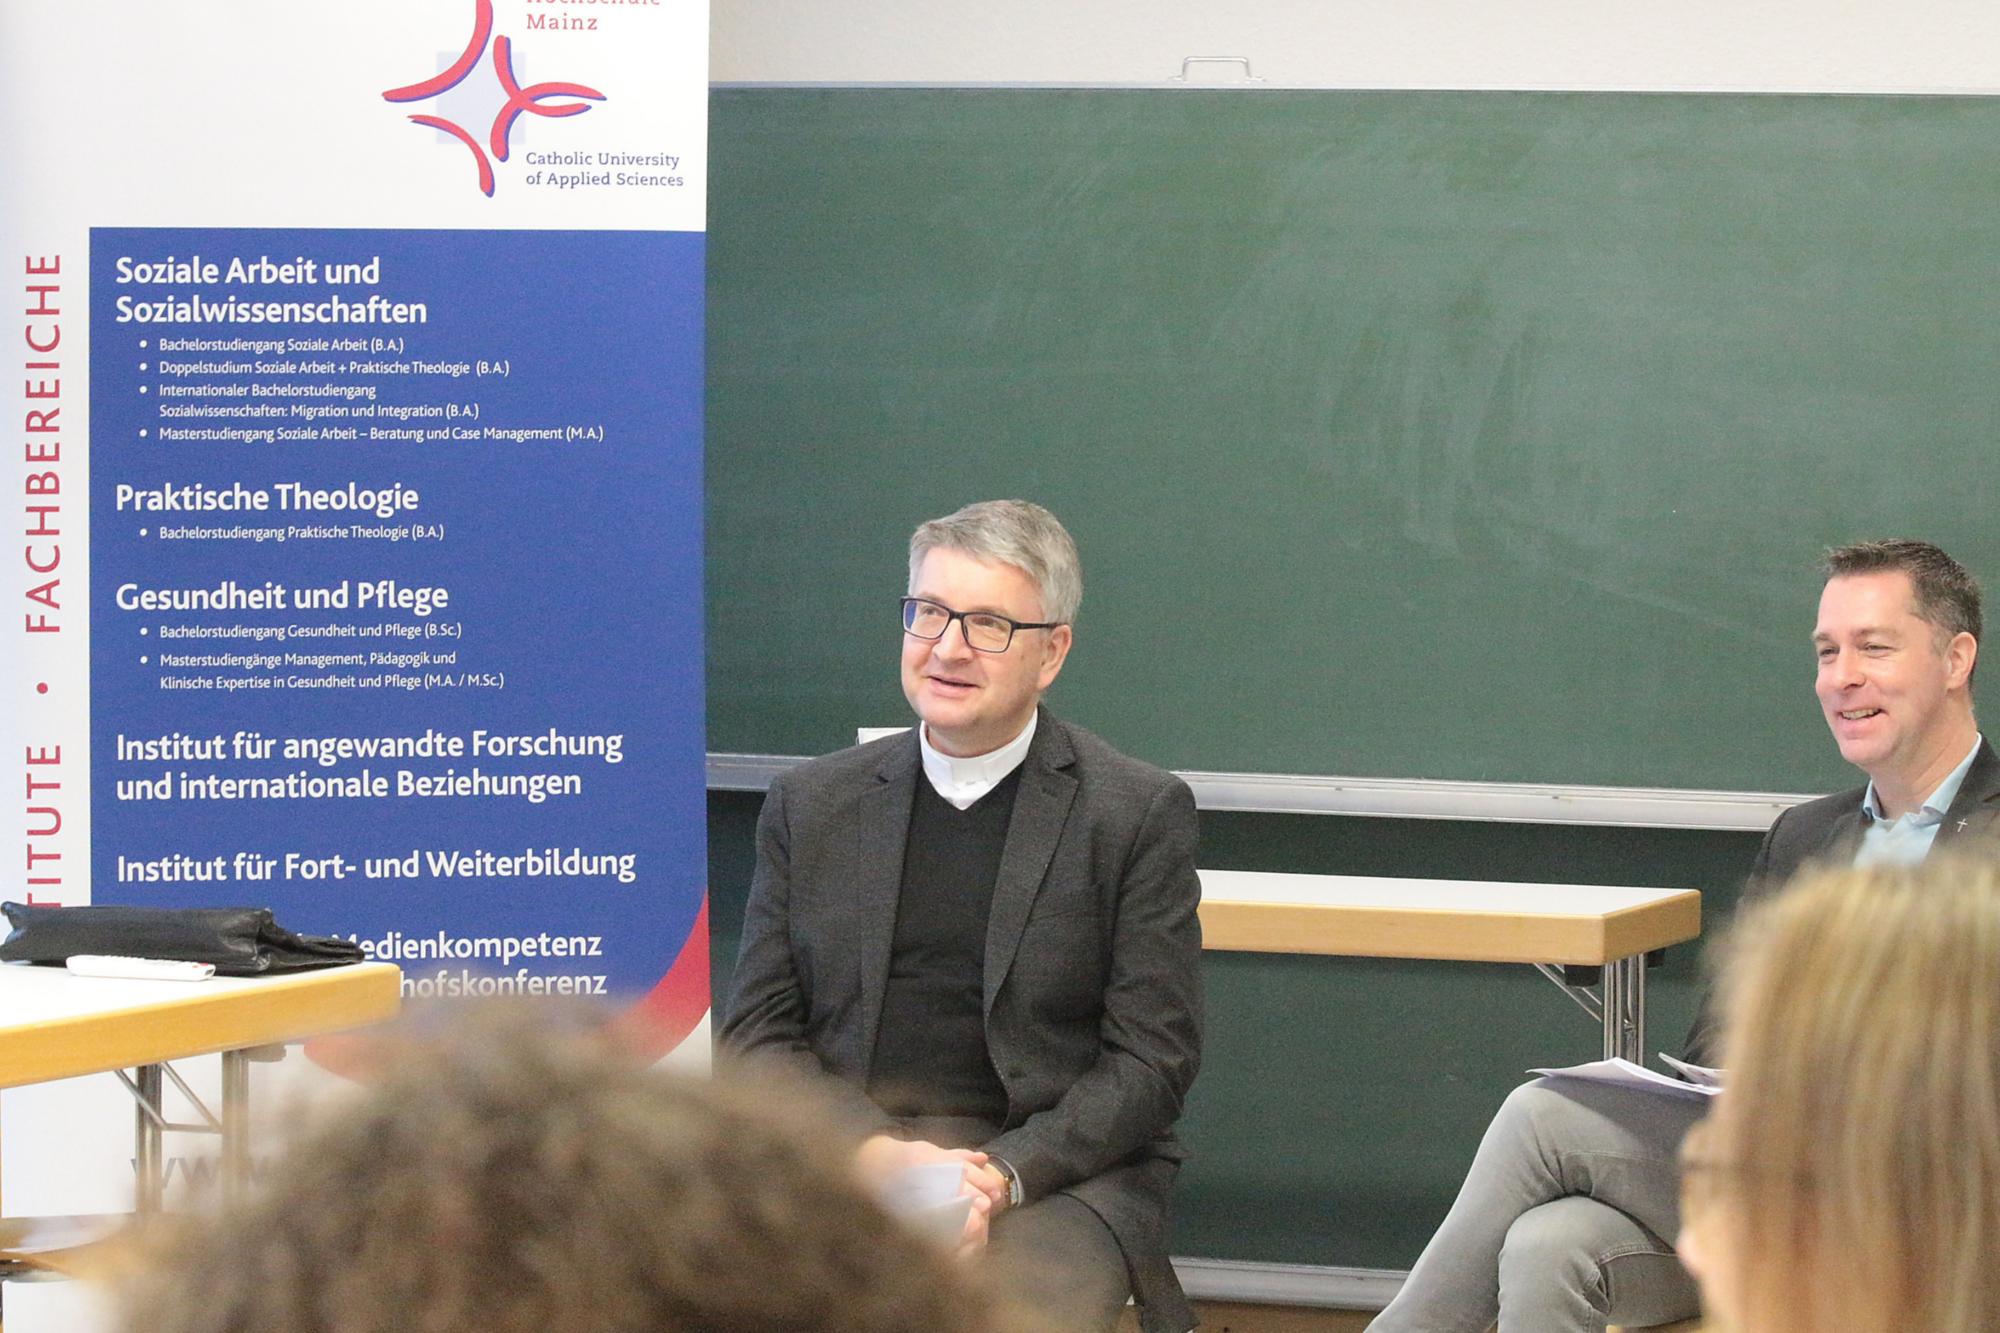 Mainz, 11. Januar 2019: Bischof Peter Kohlgraf bei der Begegnung mit Studierenden des neuen Doppelstudiengangs der KH Mainz; rechts: Professor Dr. Jan Loffeld.